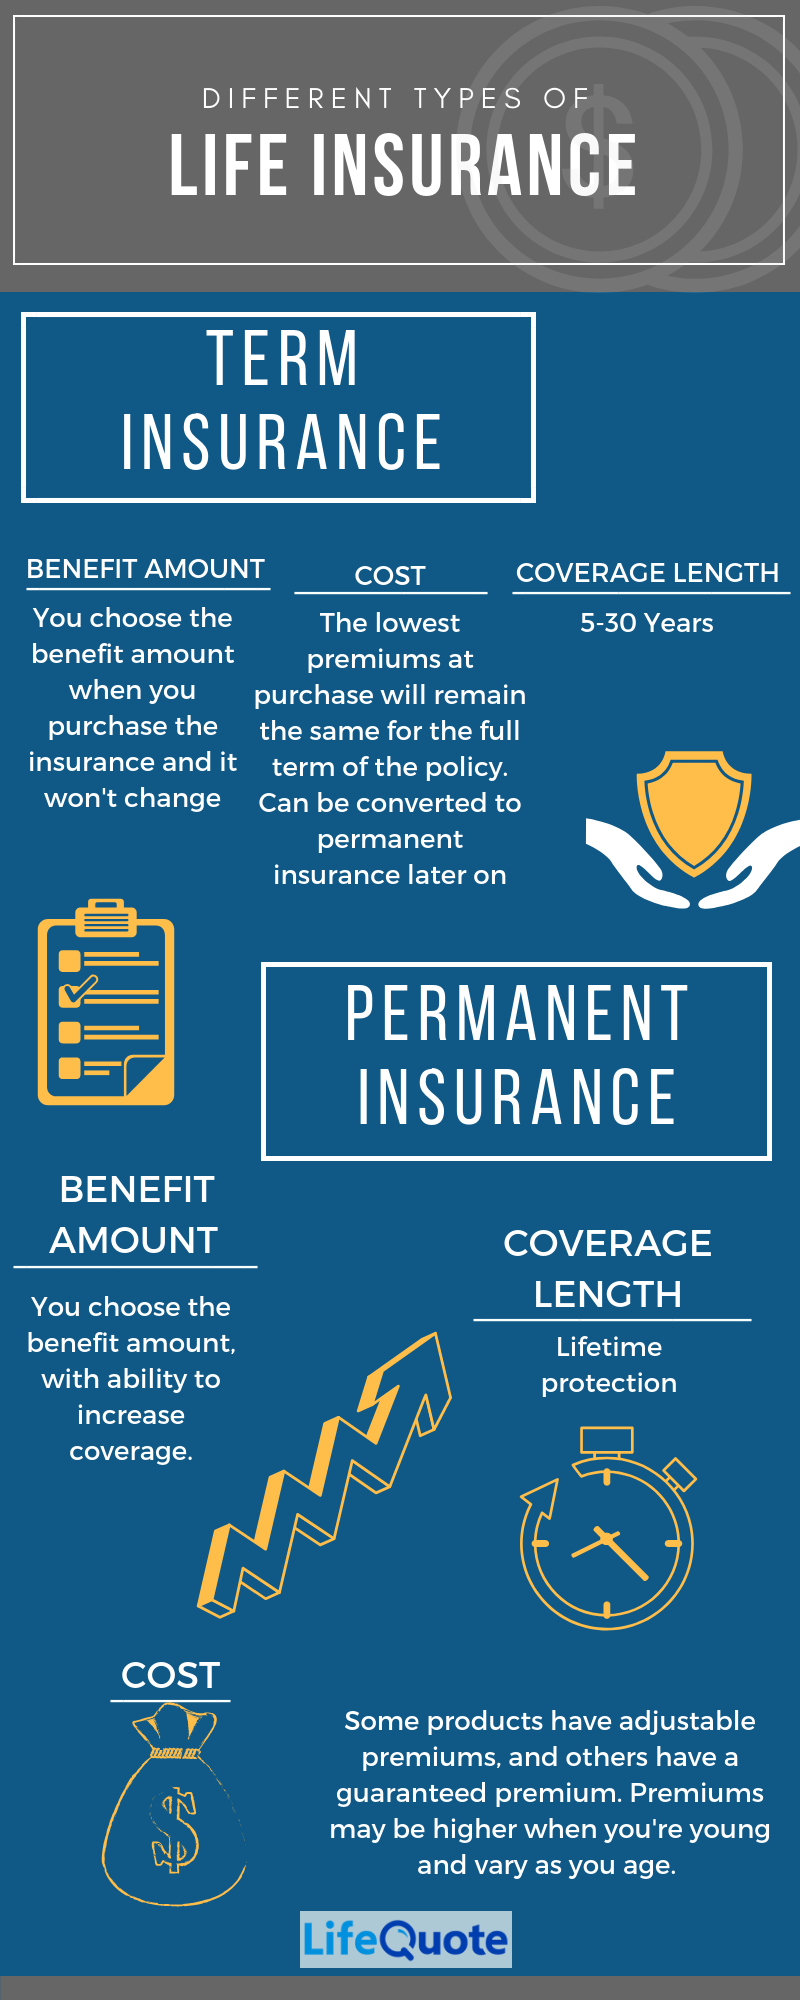 permanent term life insurance